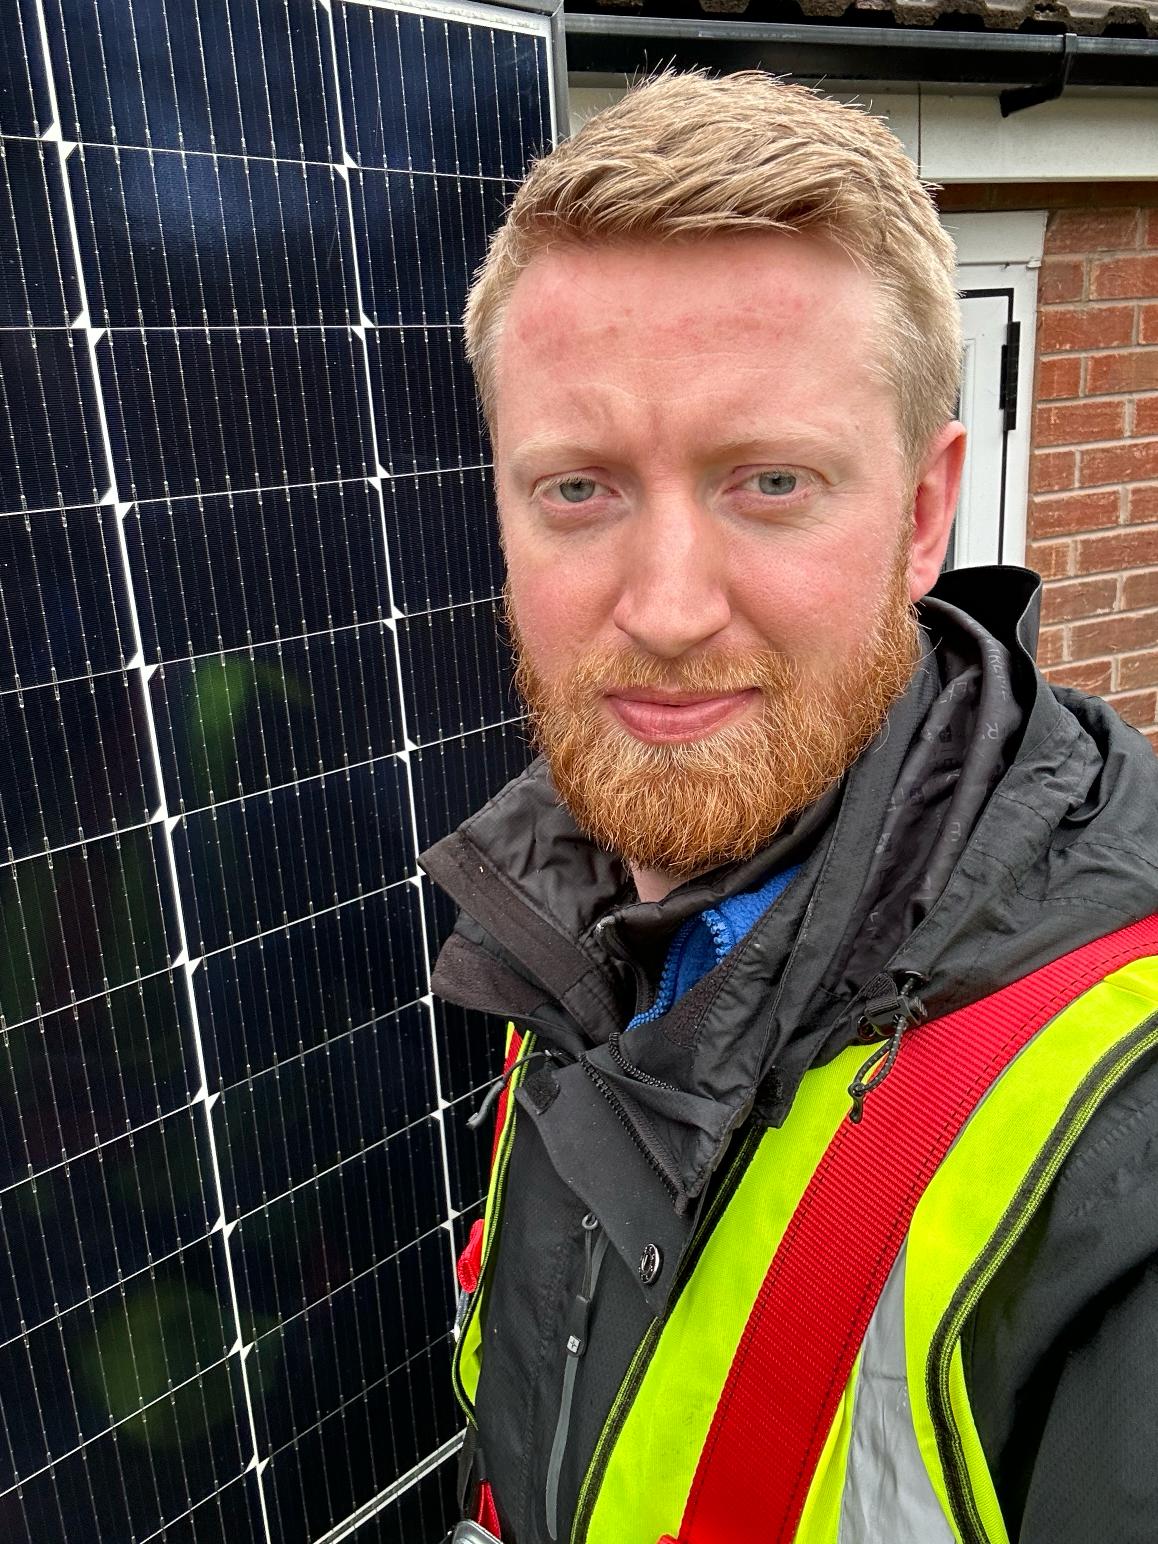 Greg Installing Solar Panels